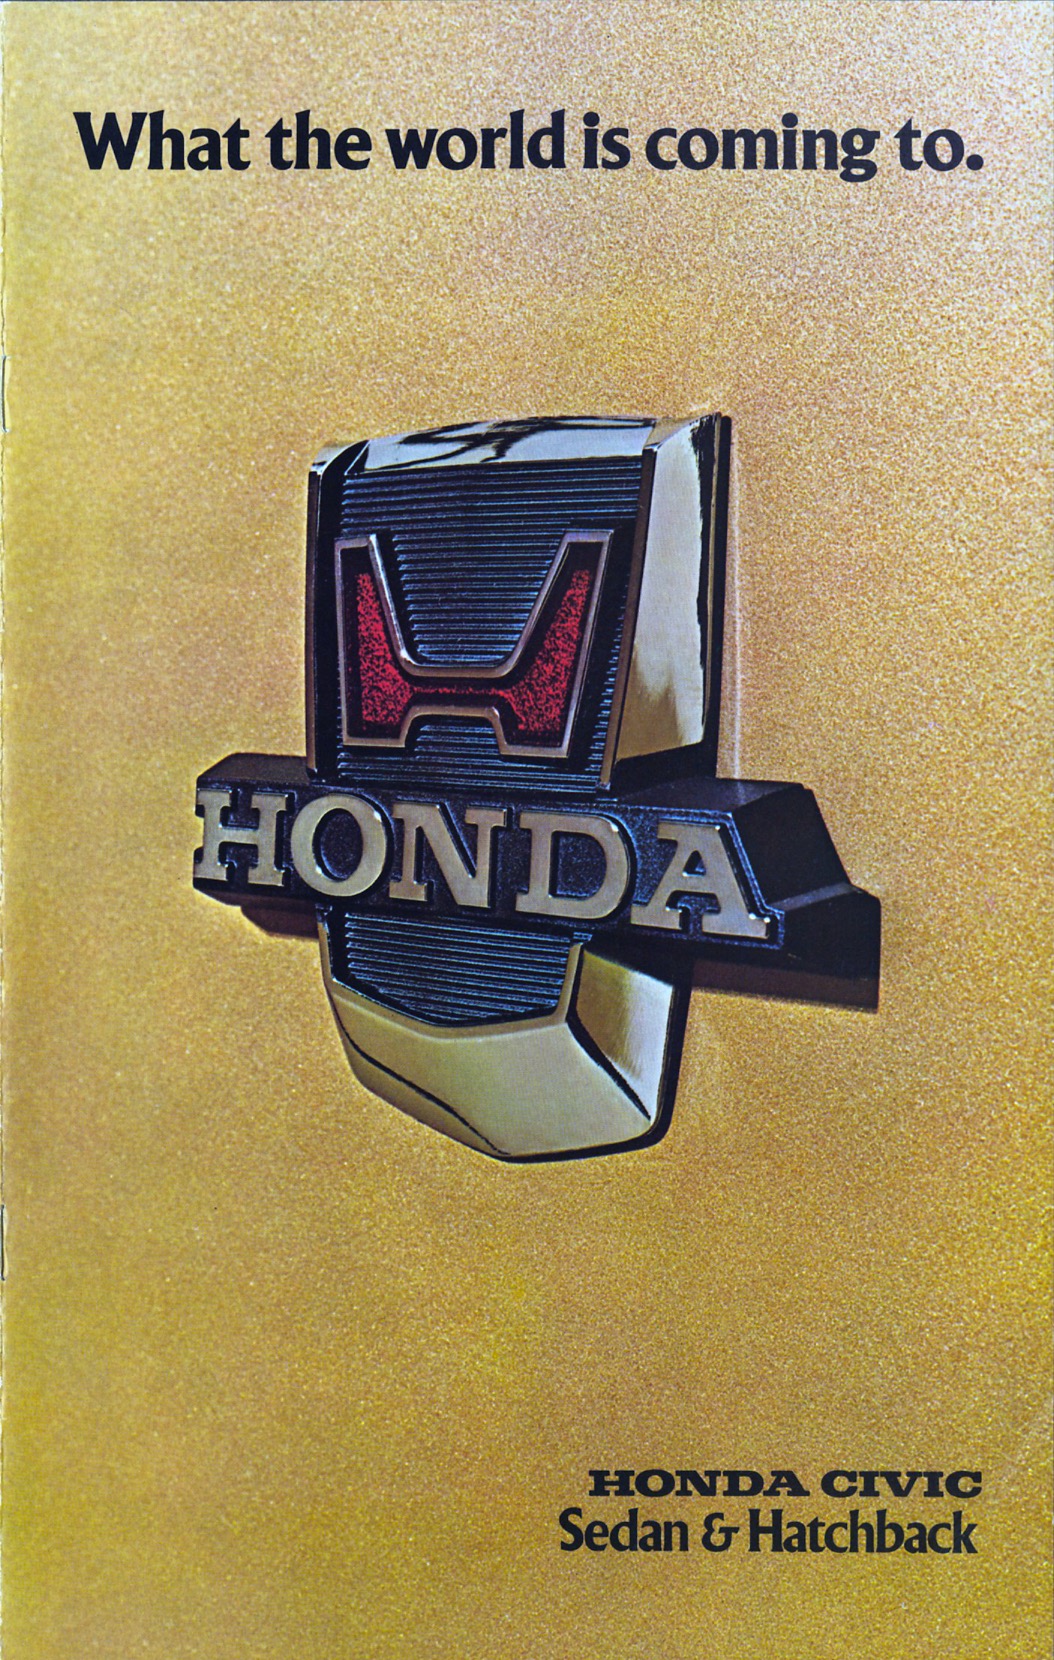 1976 Honda Civic Brochure Page 2